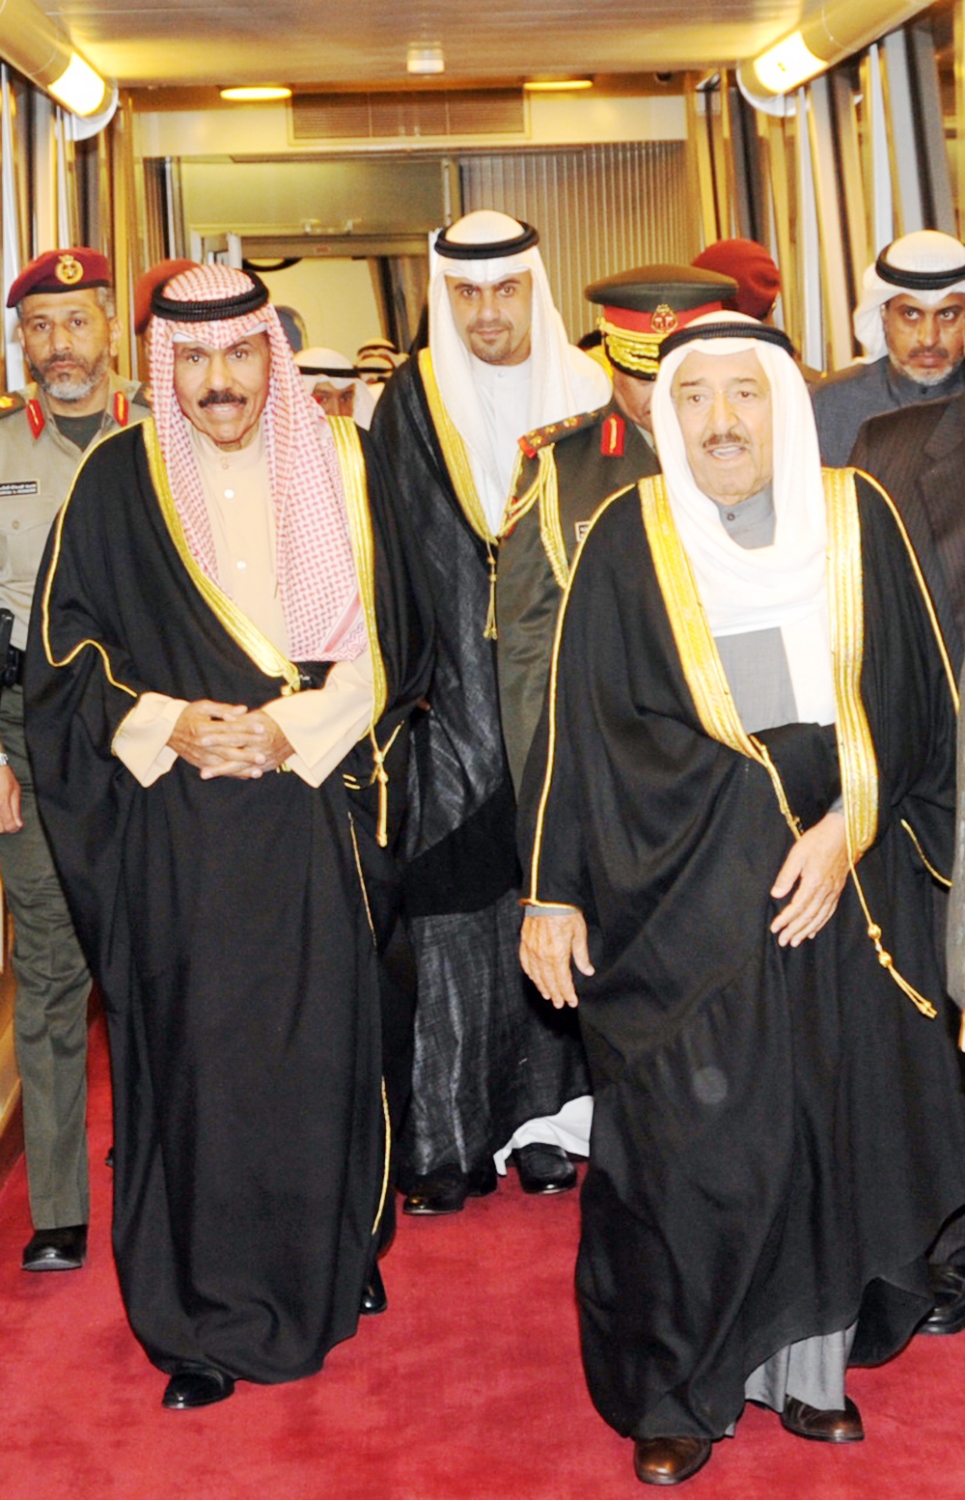 His highness the Amir Sheikh Sabah Al-Ahmad Al-Jaber Al-Sabah  arrives from Equatorial Guinea